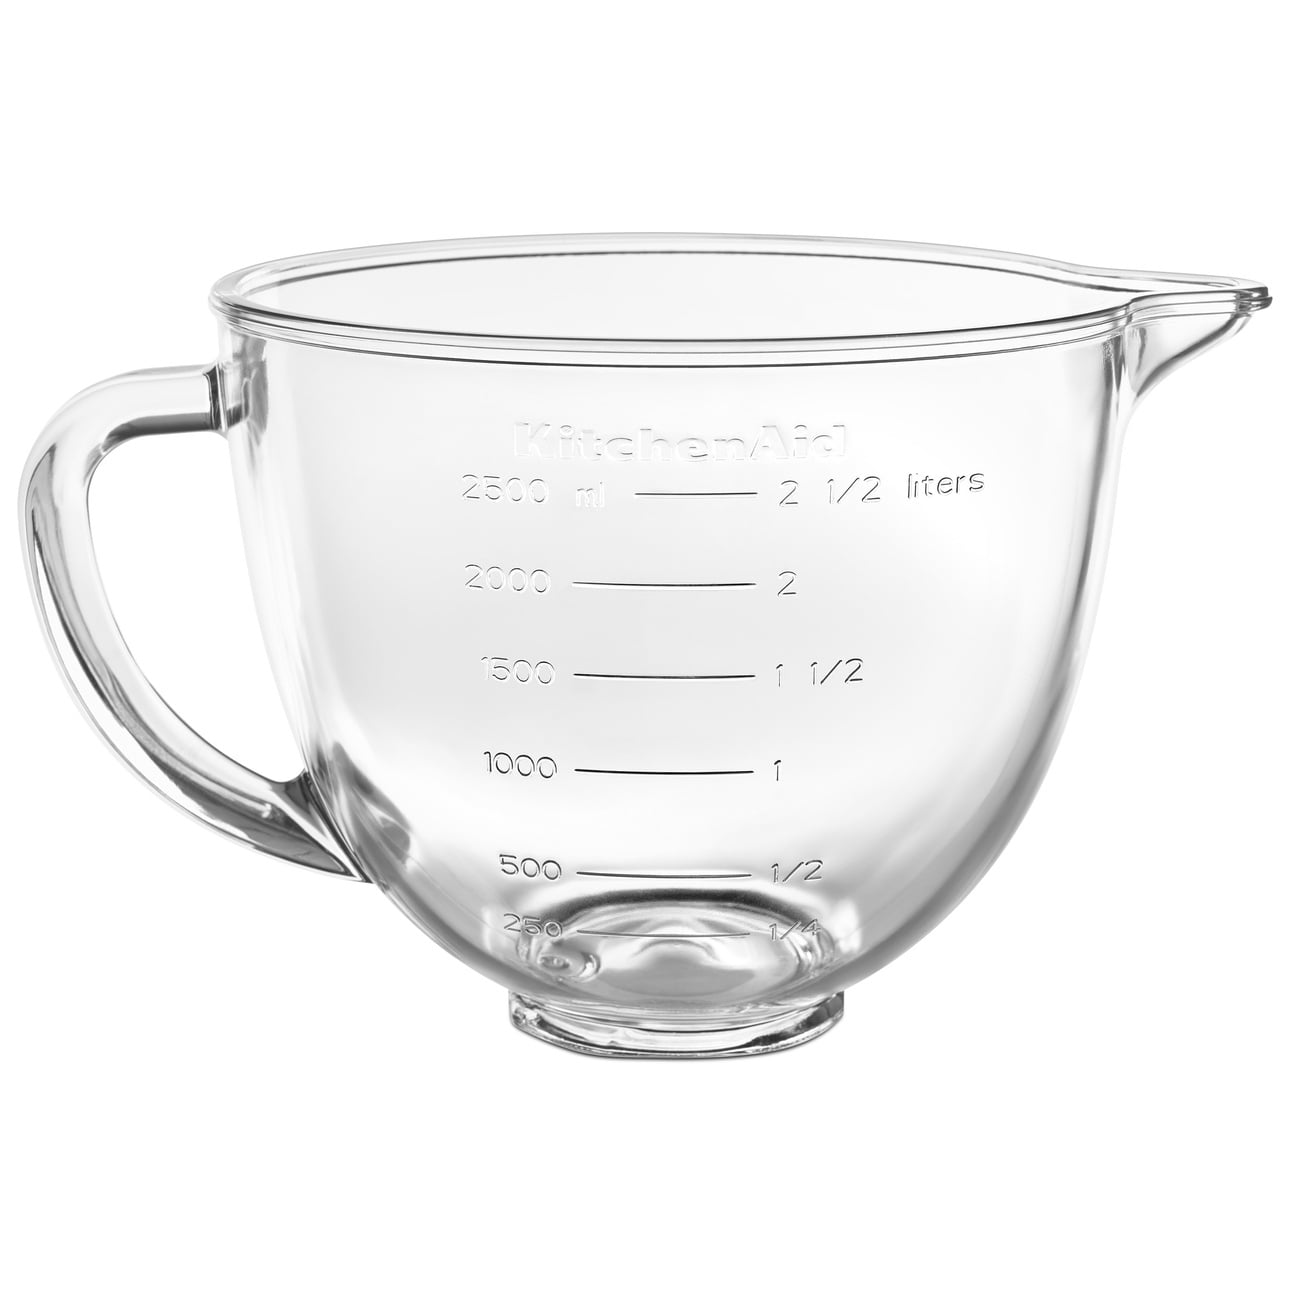 Original Pouring Chute / Fits most Metal Bowls or 5-QT Glass